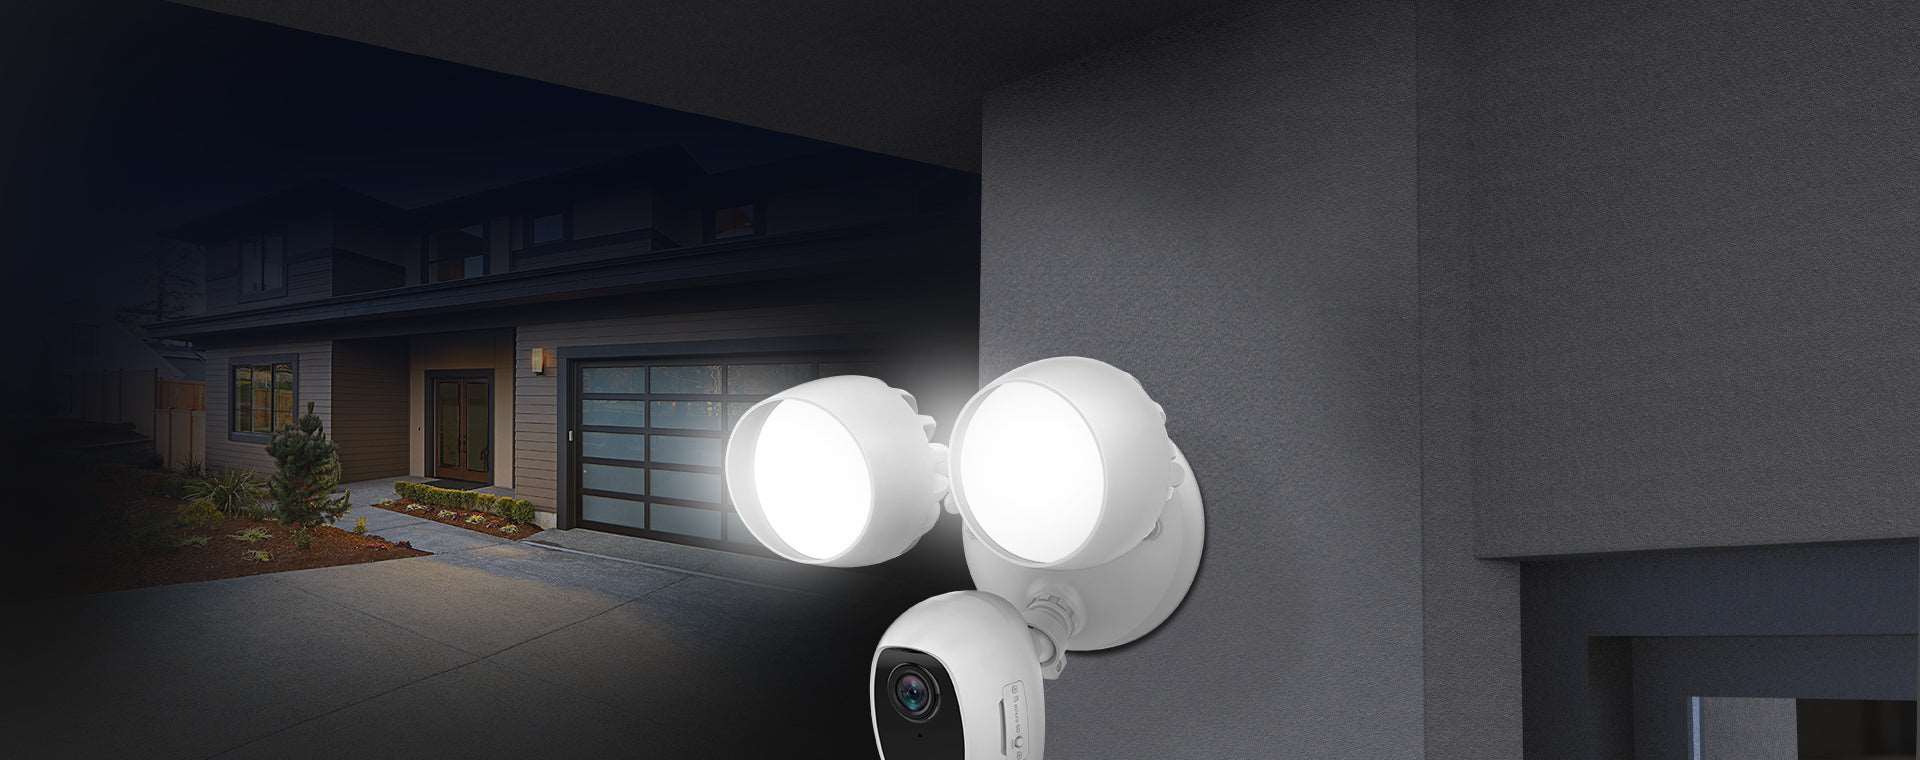 EzViz LC1C Flood Light Dual Light Security Camera